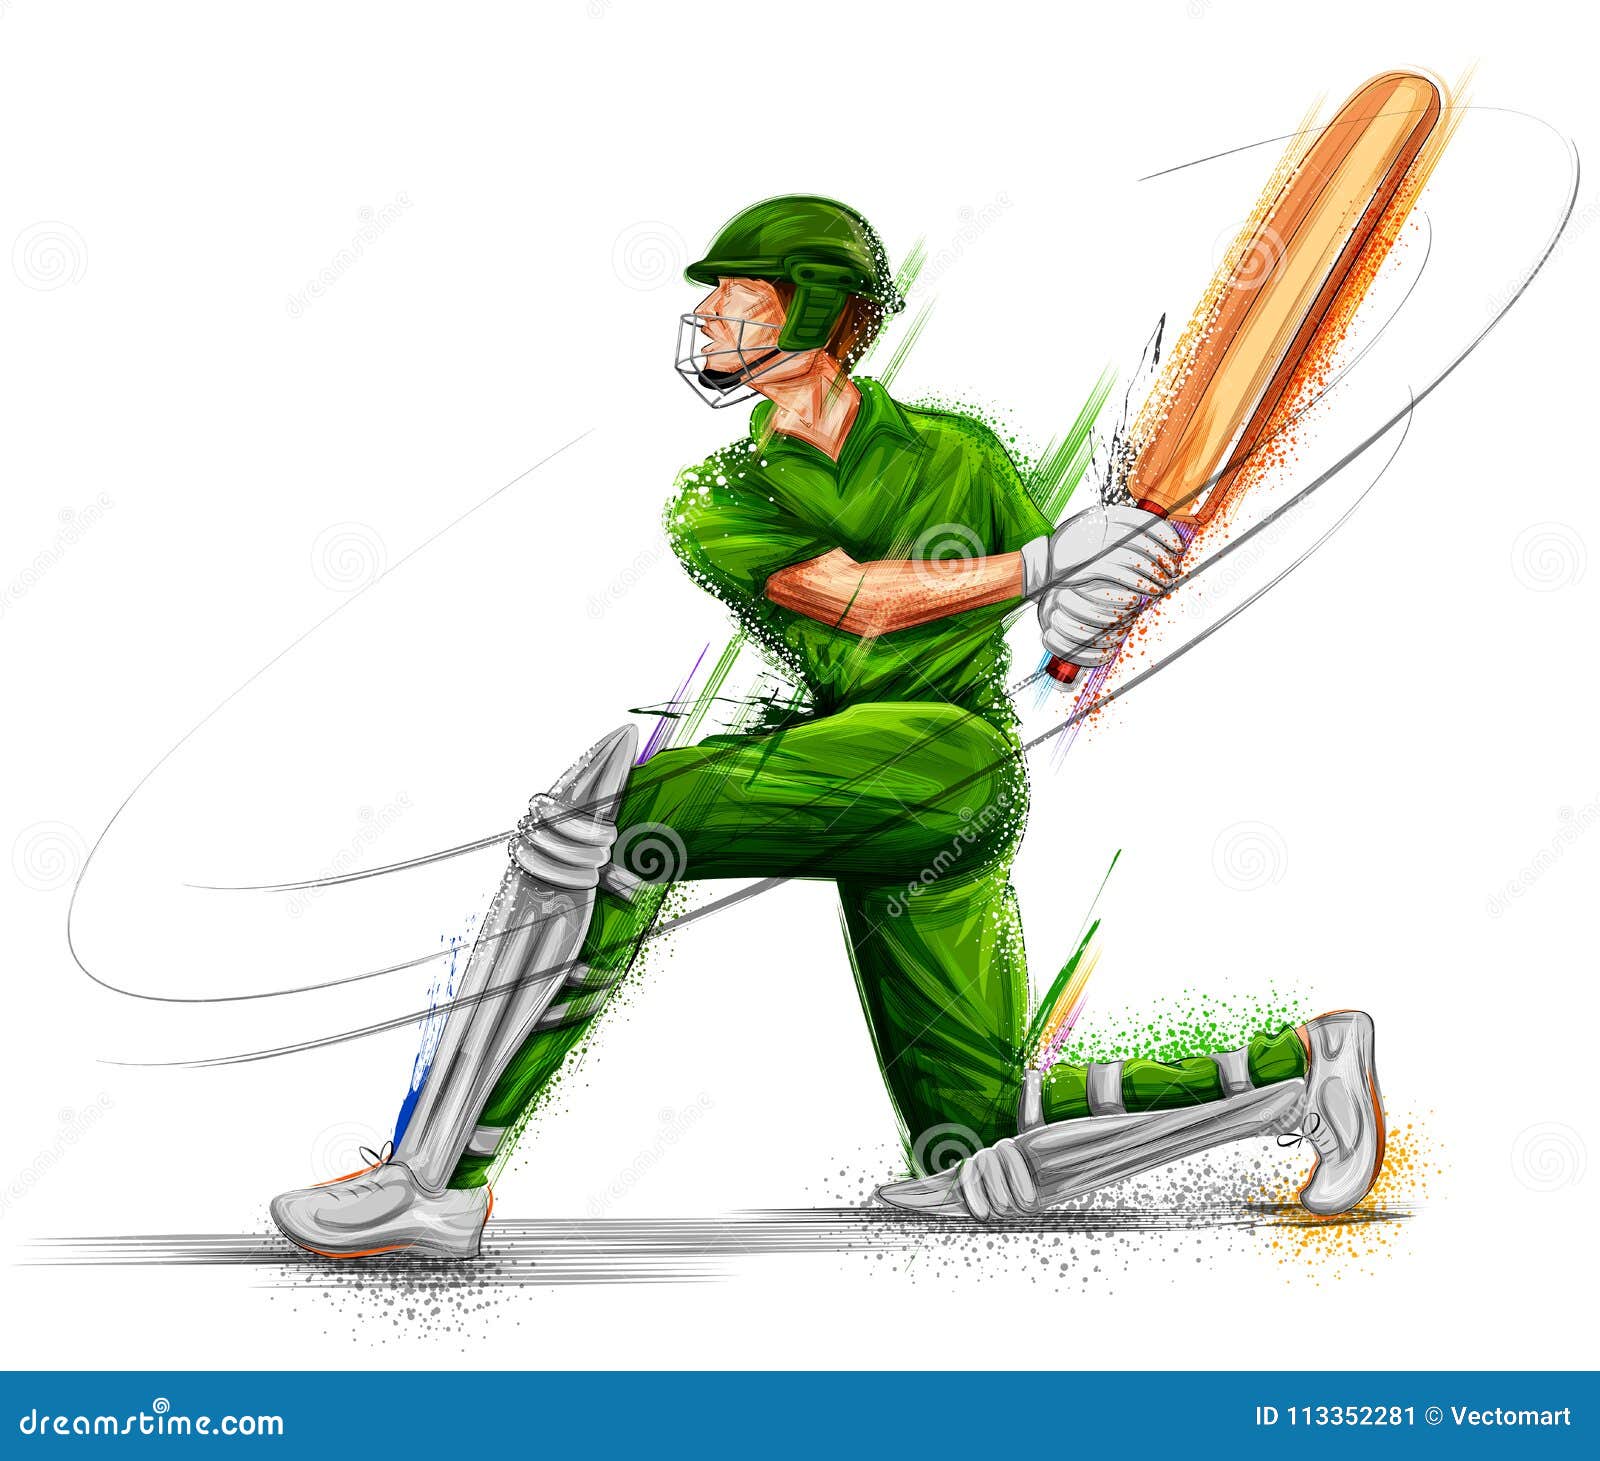 batsman-playing-cricket-championship-sports-illustration-113352281.jpg